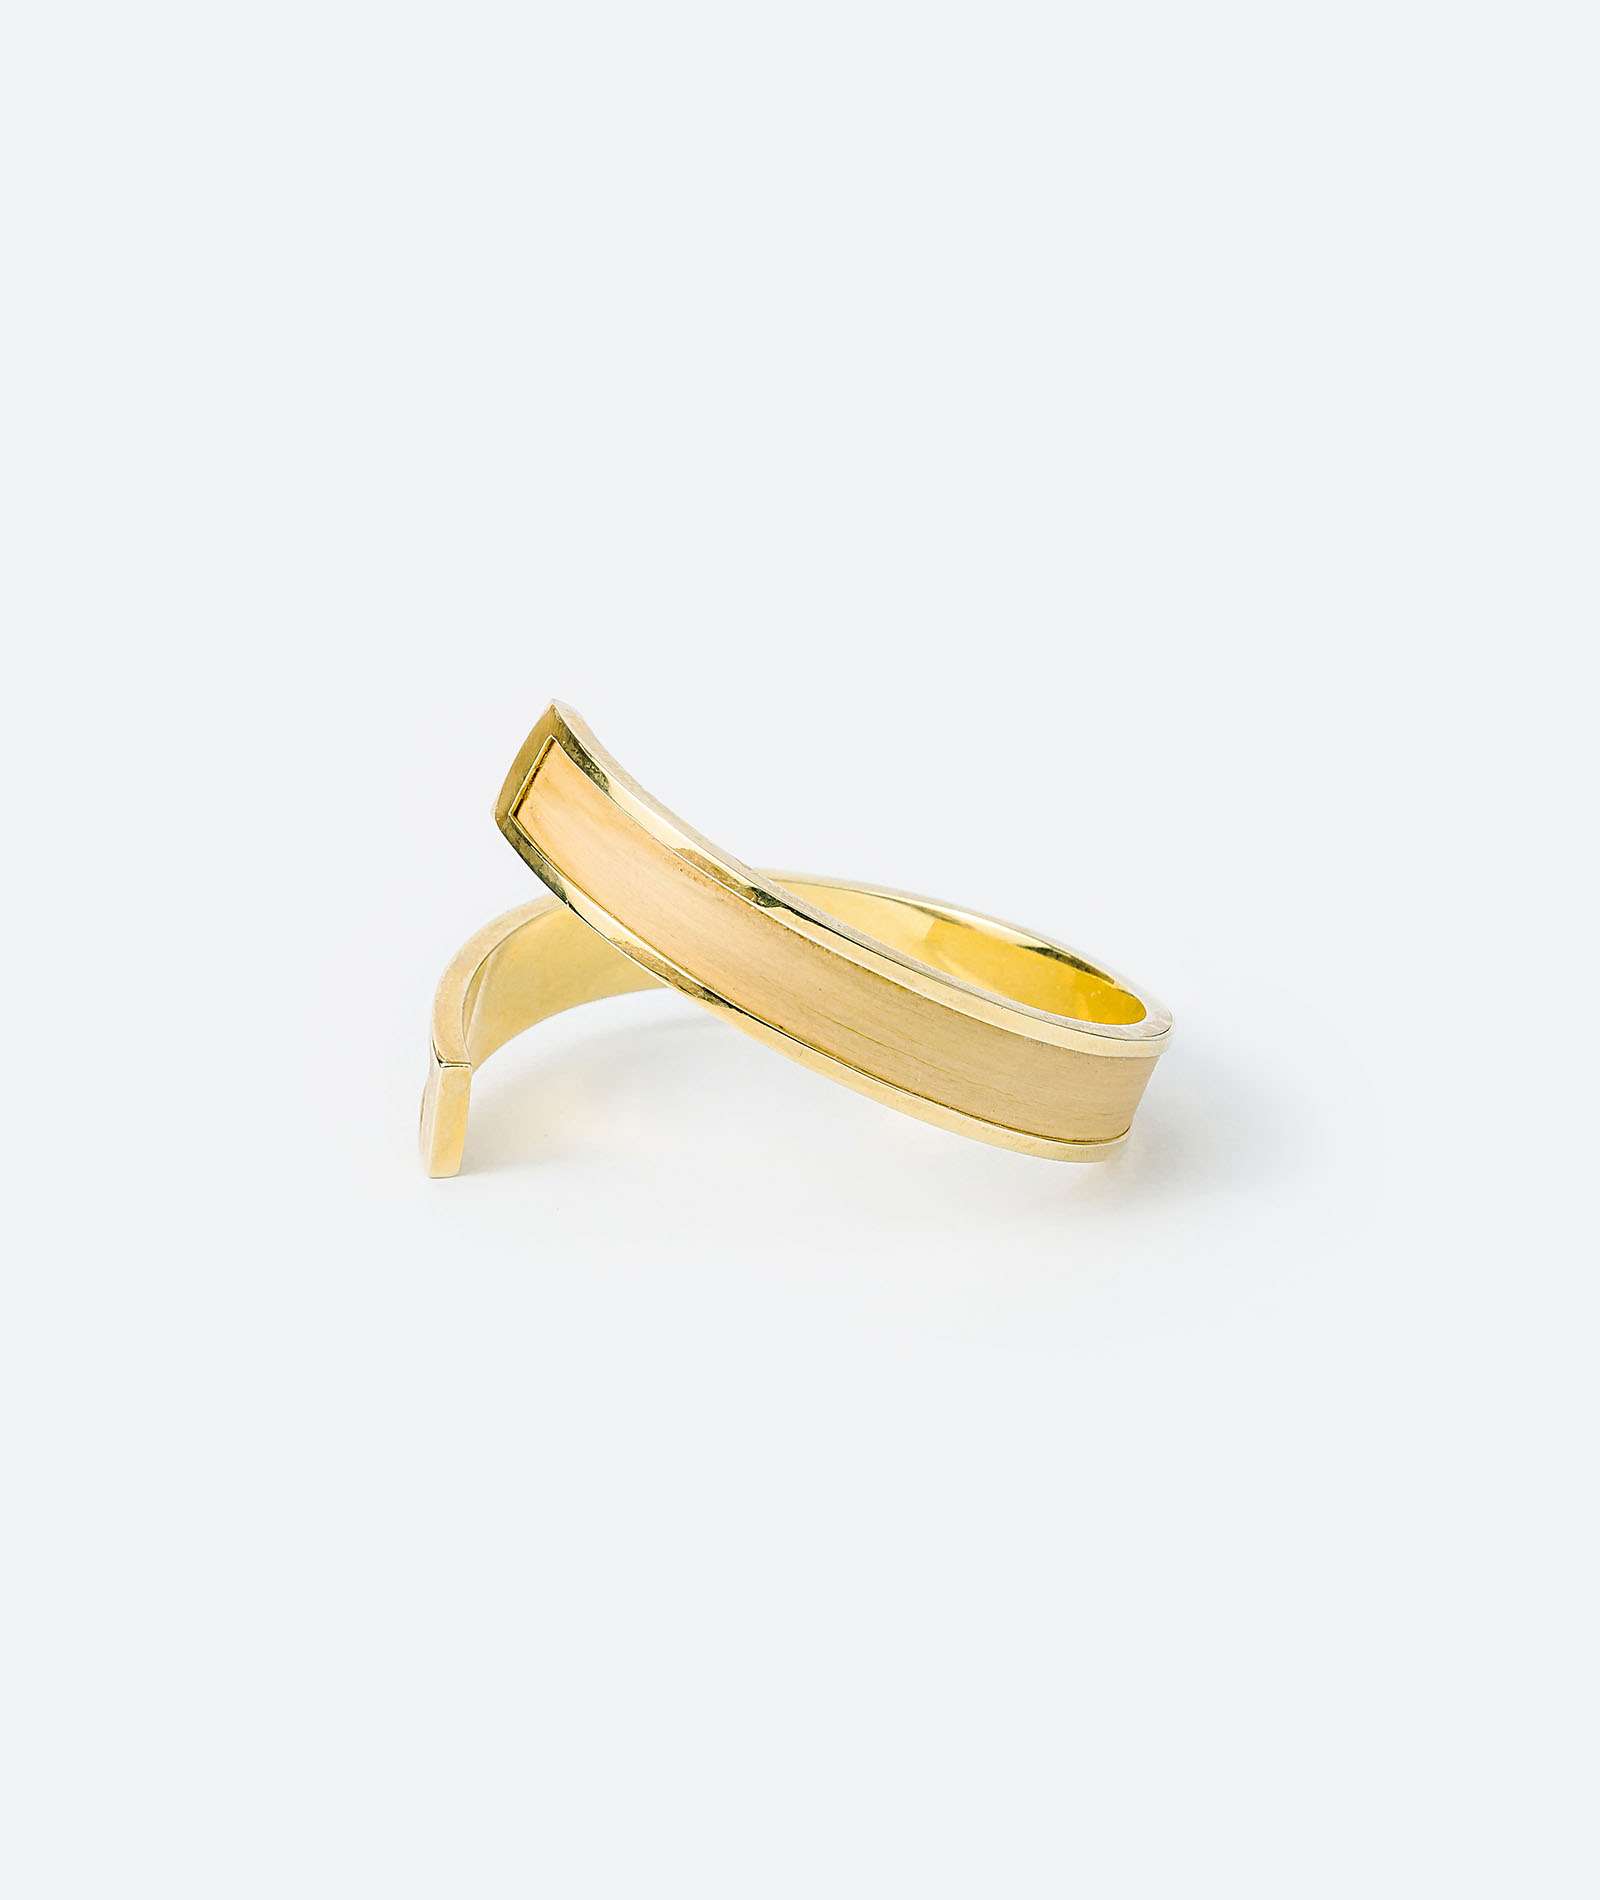 Pablo Luna Jewelry Hutan Angin Gold Yellow 1